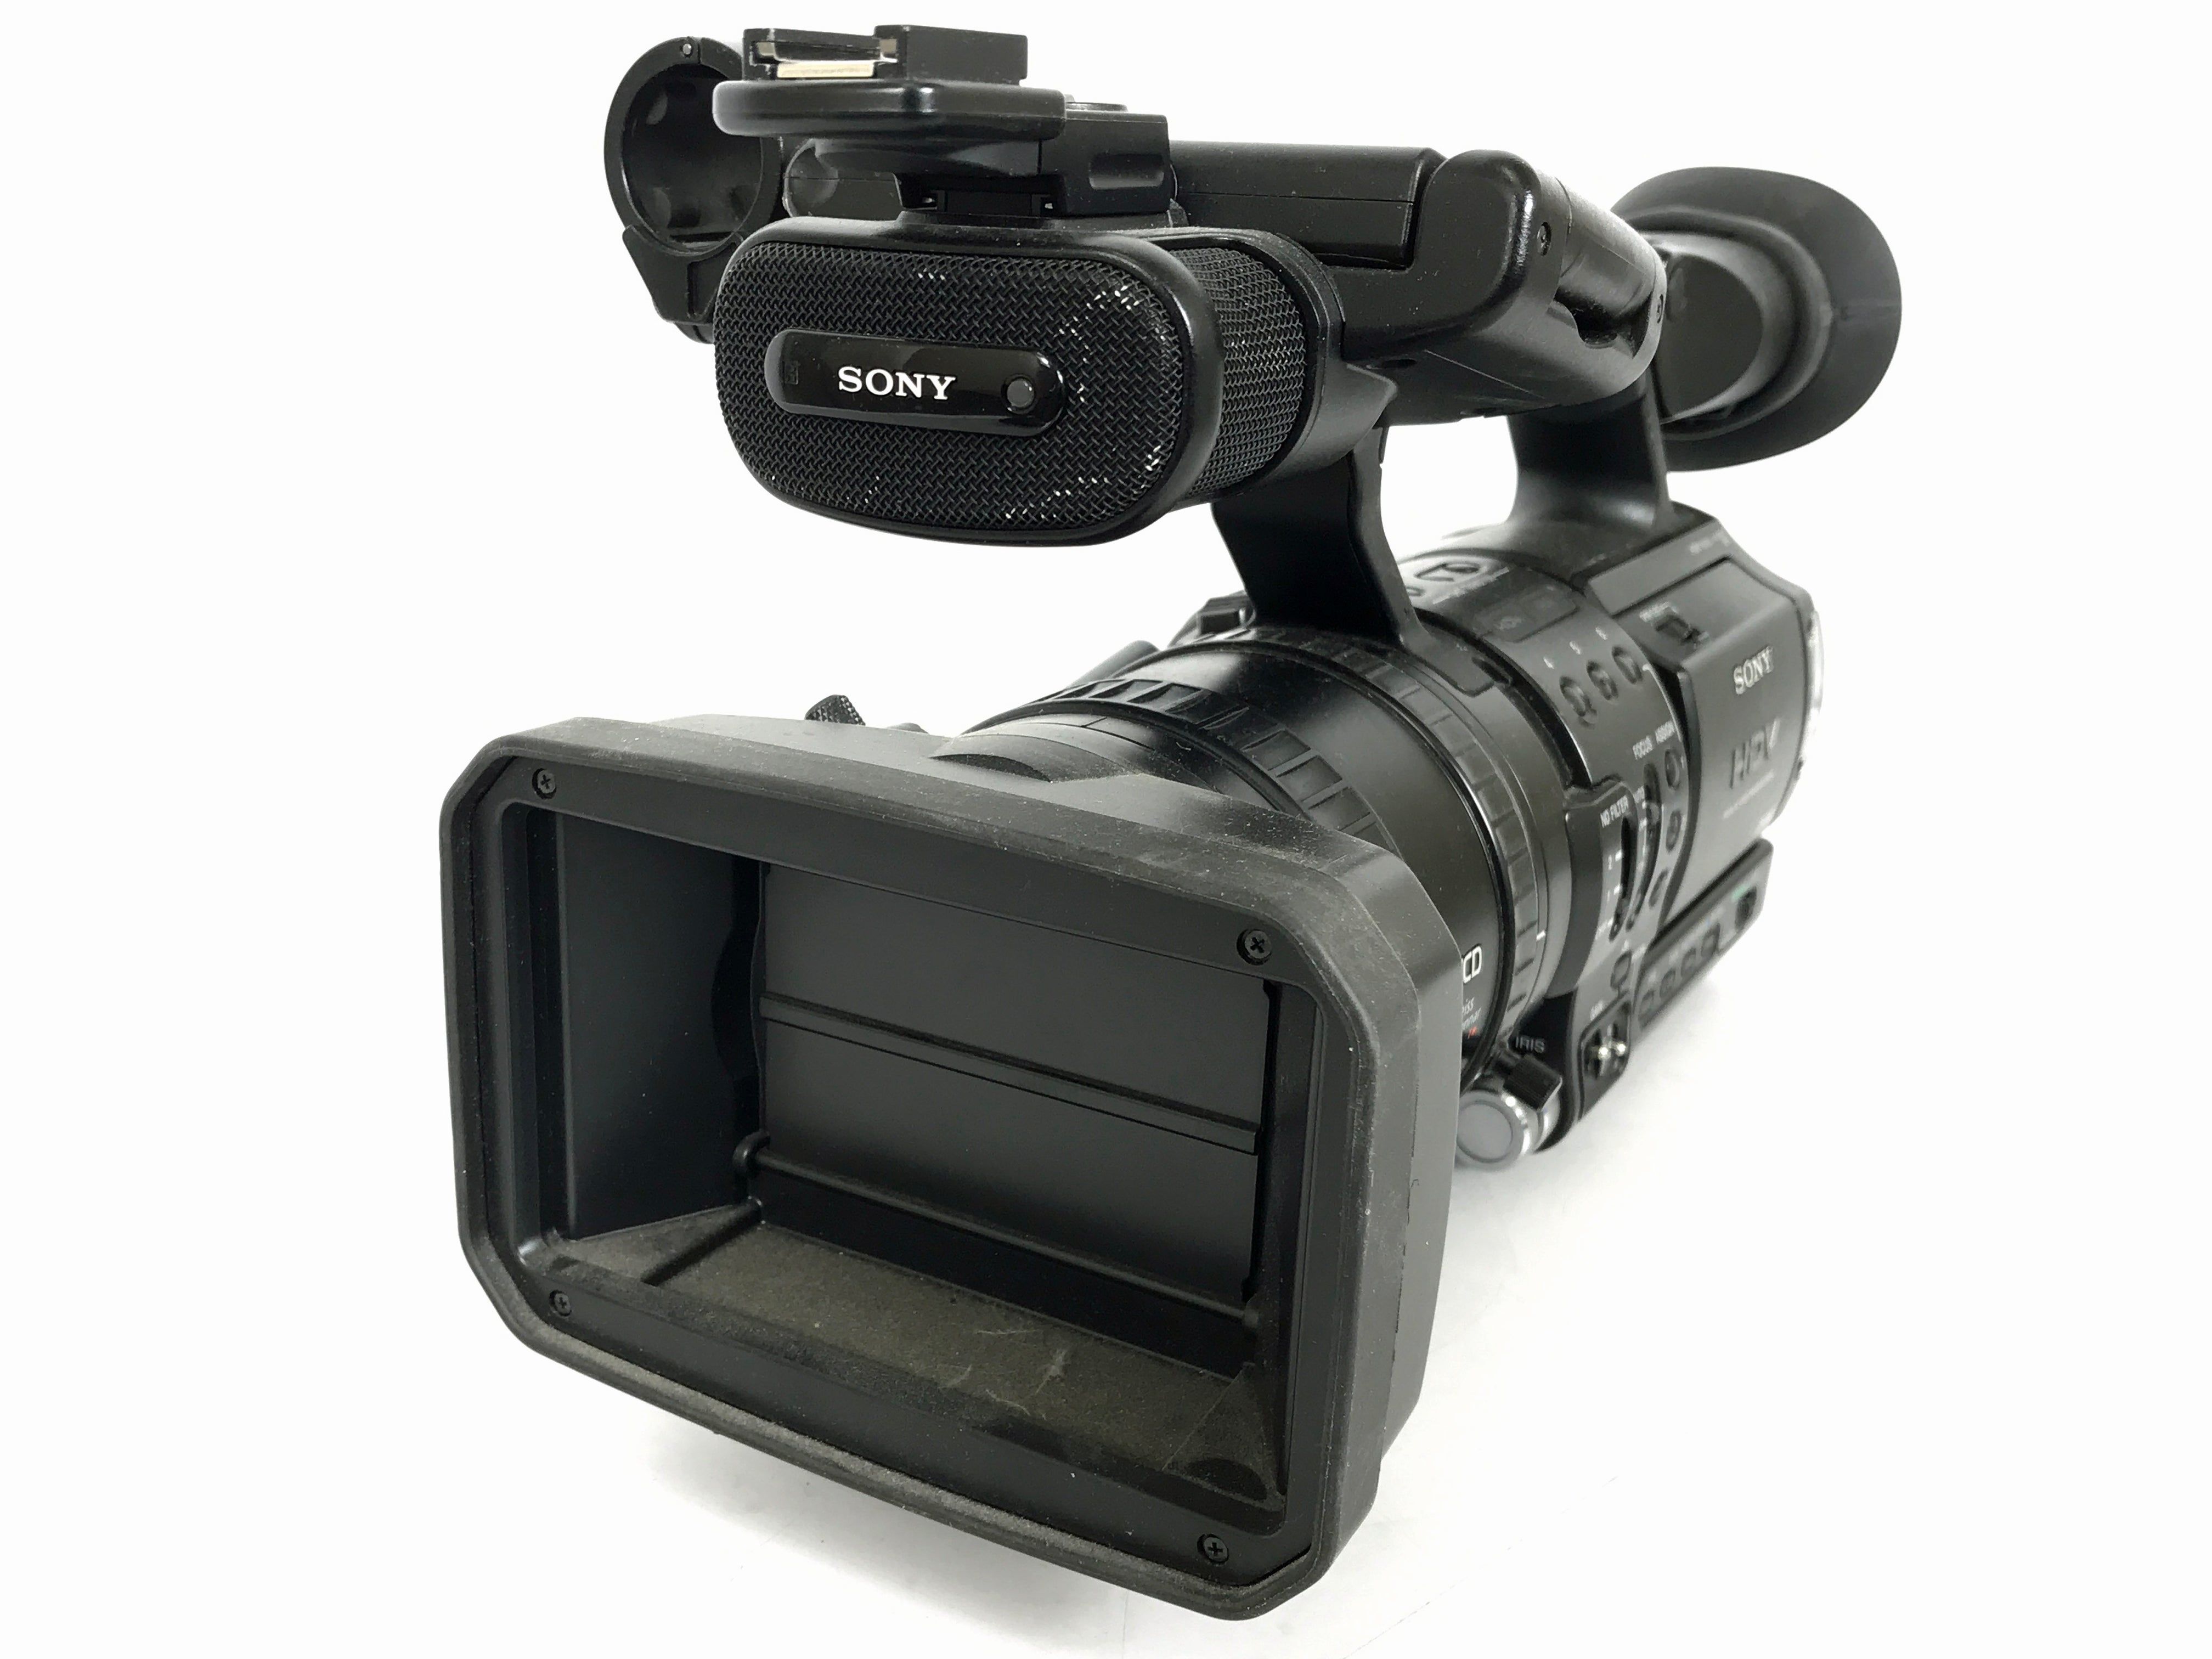 Sony HVR-Z1U 1/3" 3-CCD HDV Camcorder